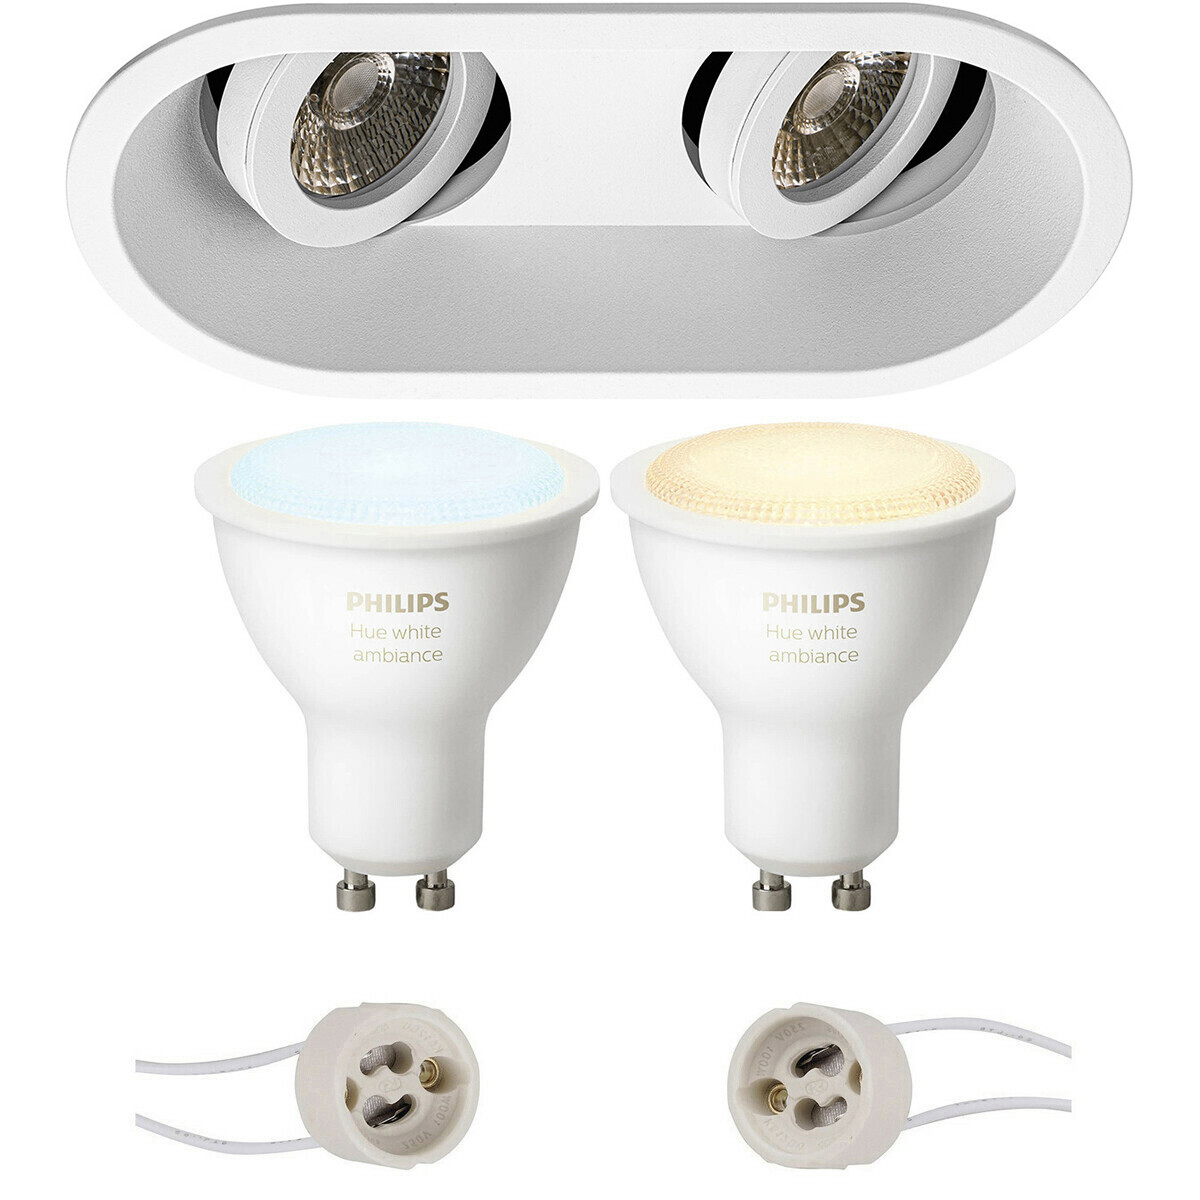 Pragmi Zano Pro Inbouw Ovaal Dubbel Mat Wit Kantelbaar 185x93mm Philips Hue LED Spot Set GU10 White 